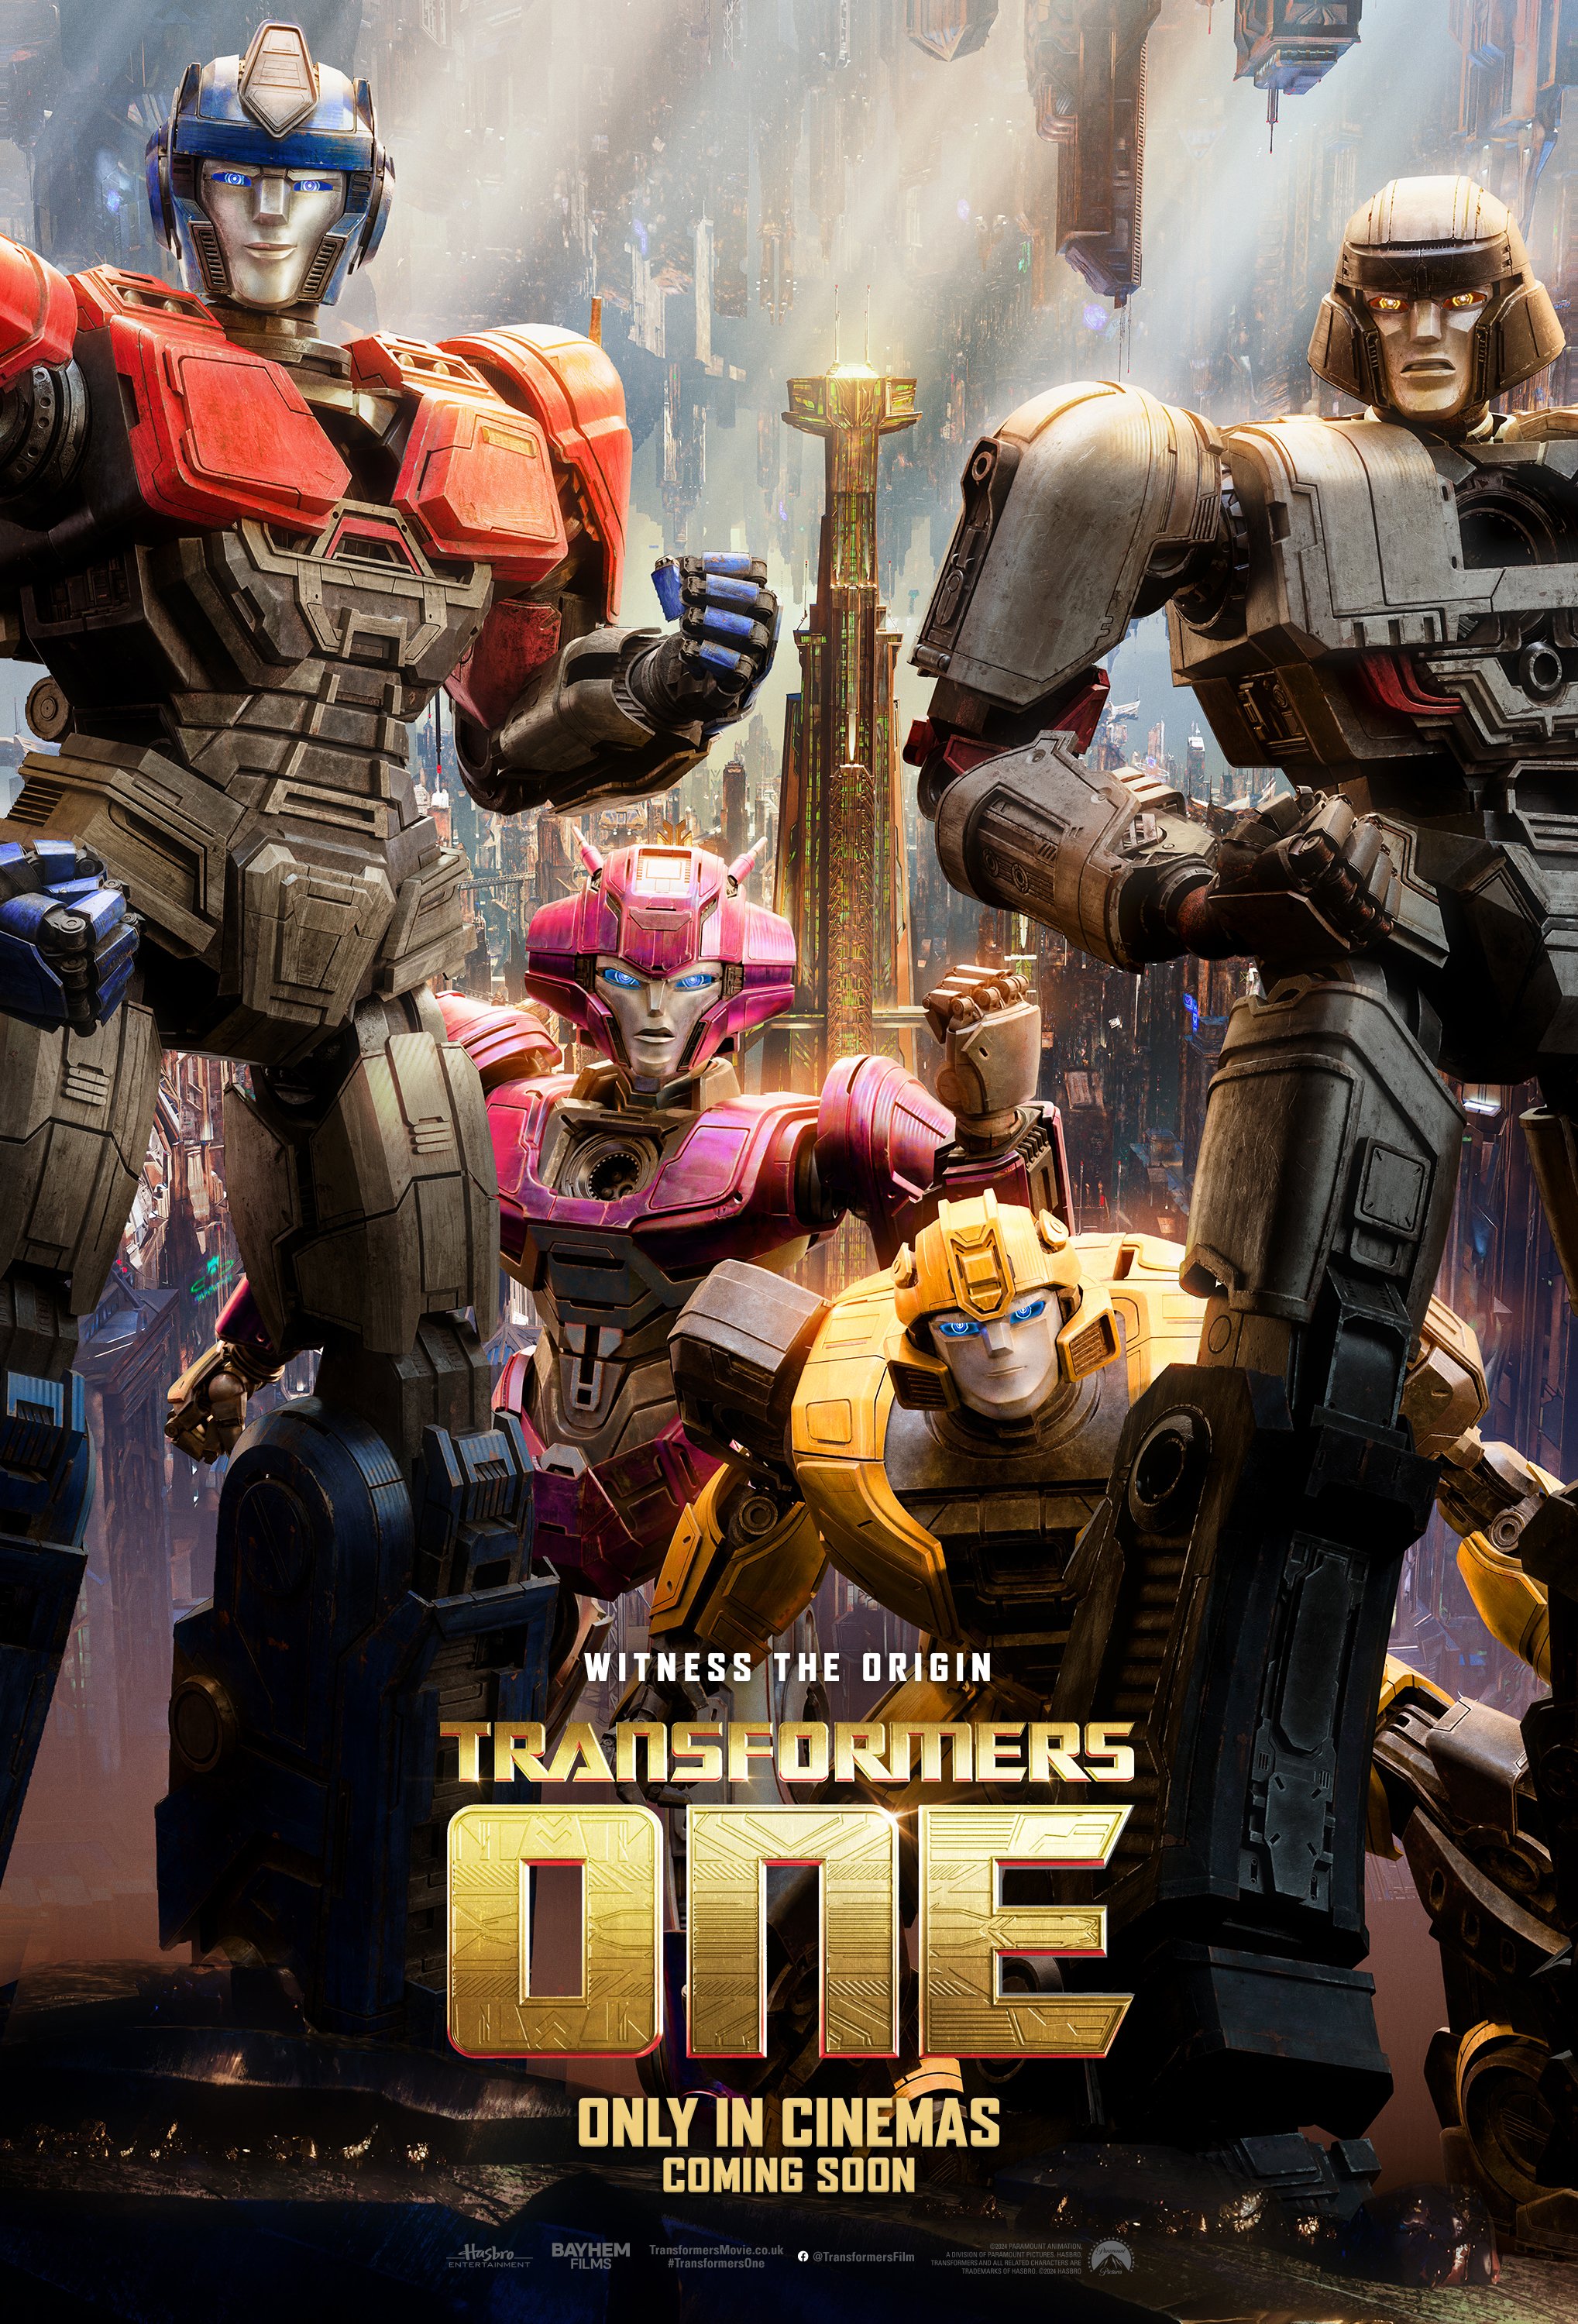 Transformers One lanza su primer avance 2